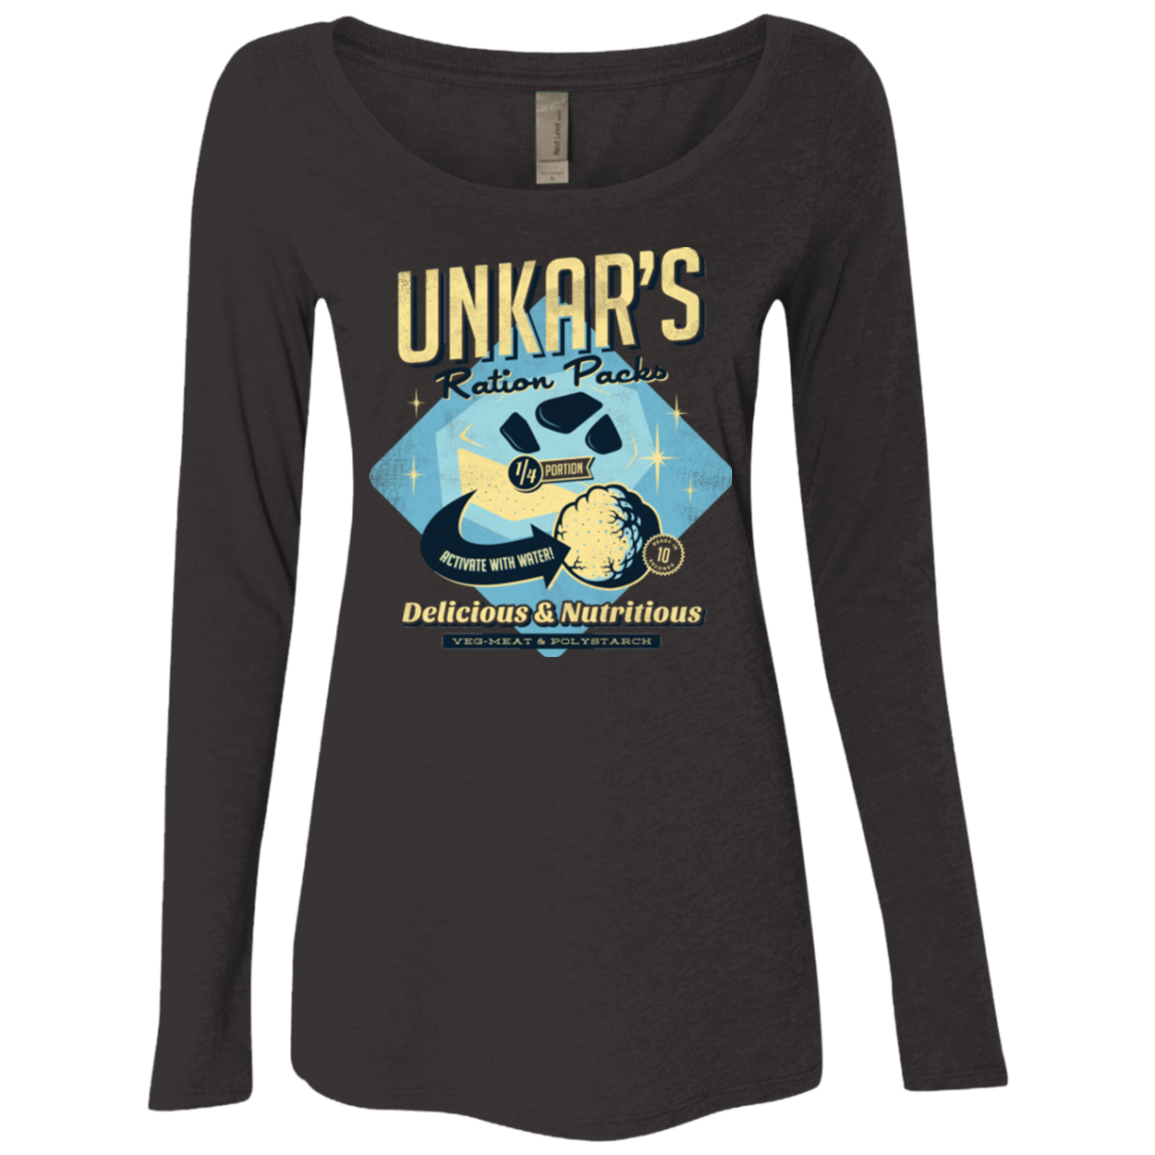 Unkars Ration Packs Women's Triblend Long Sleeve Shirt